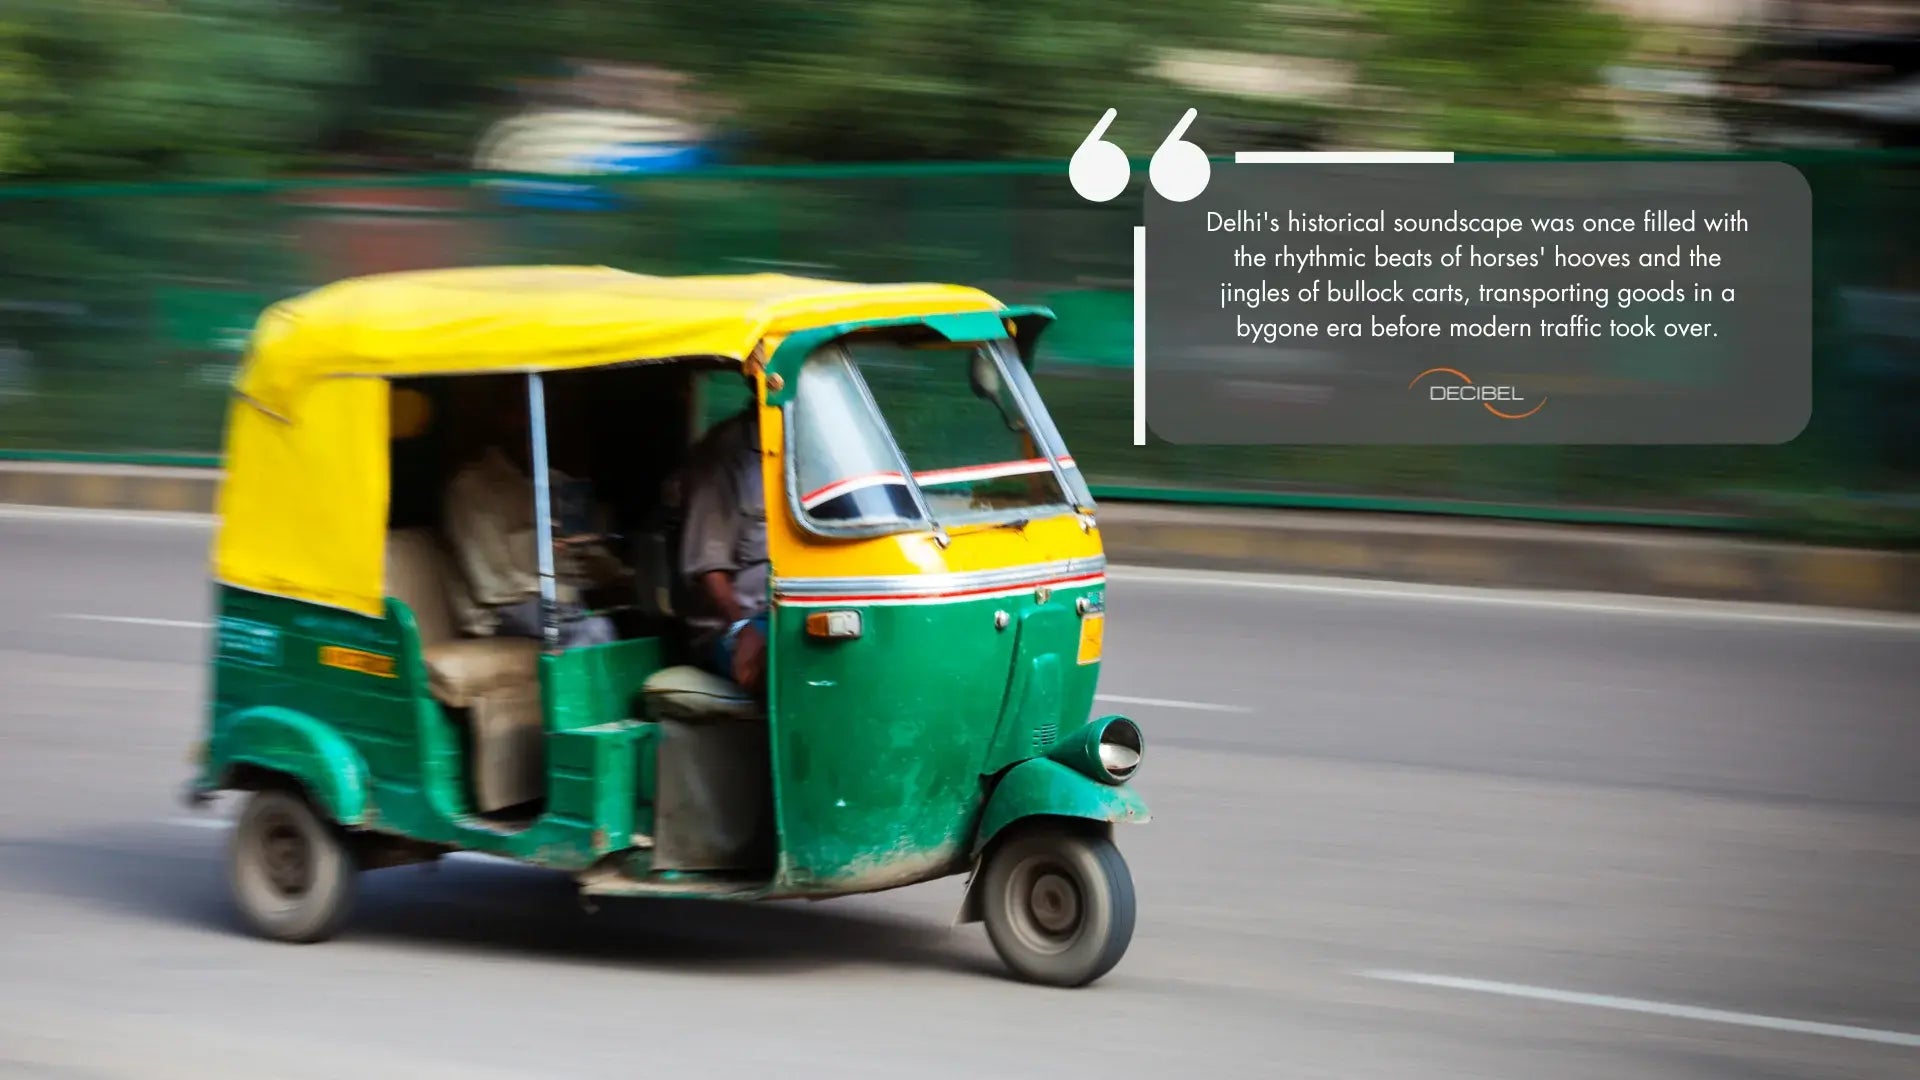 Exploring-Loudest-Quietest-Cities-in-the-World-blog-post-DECIBEL-delhi-car